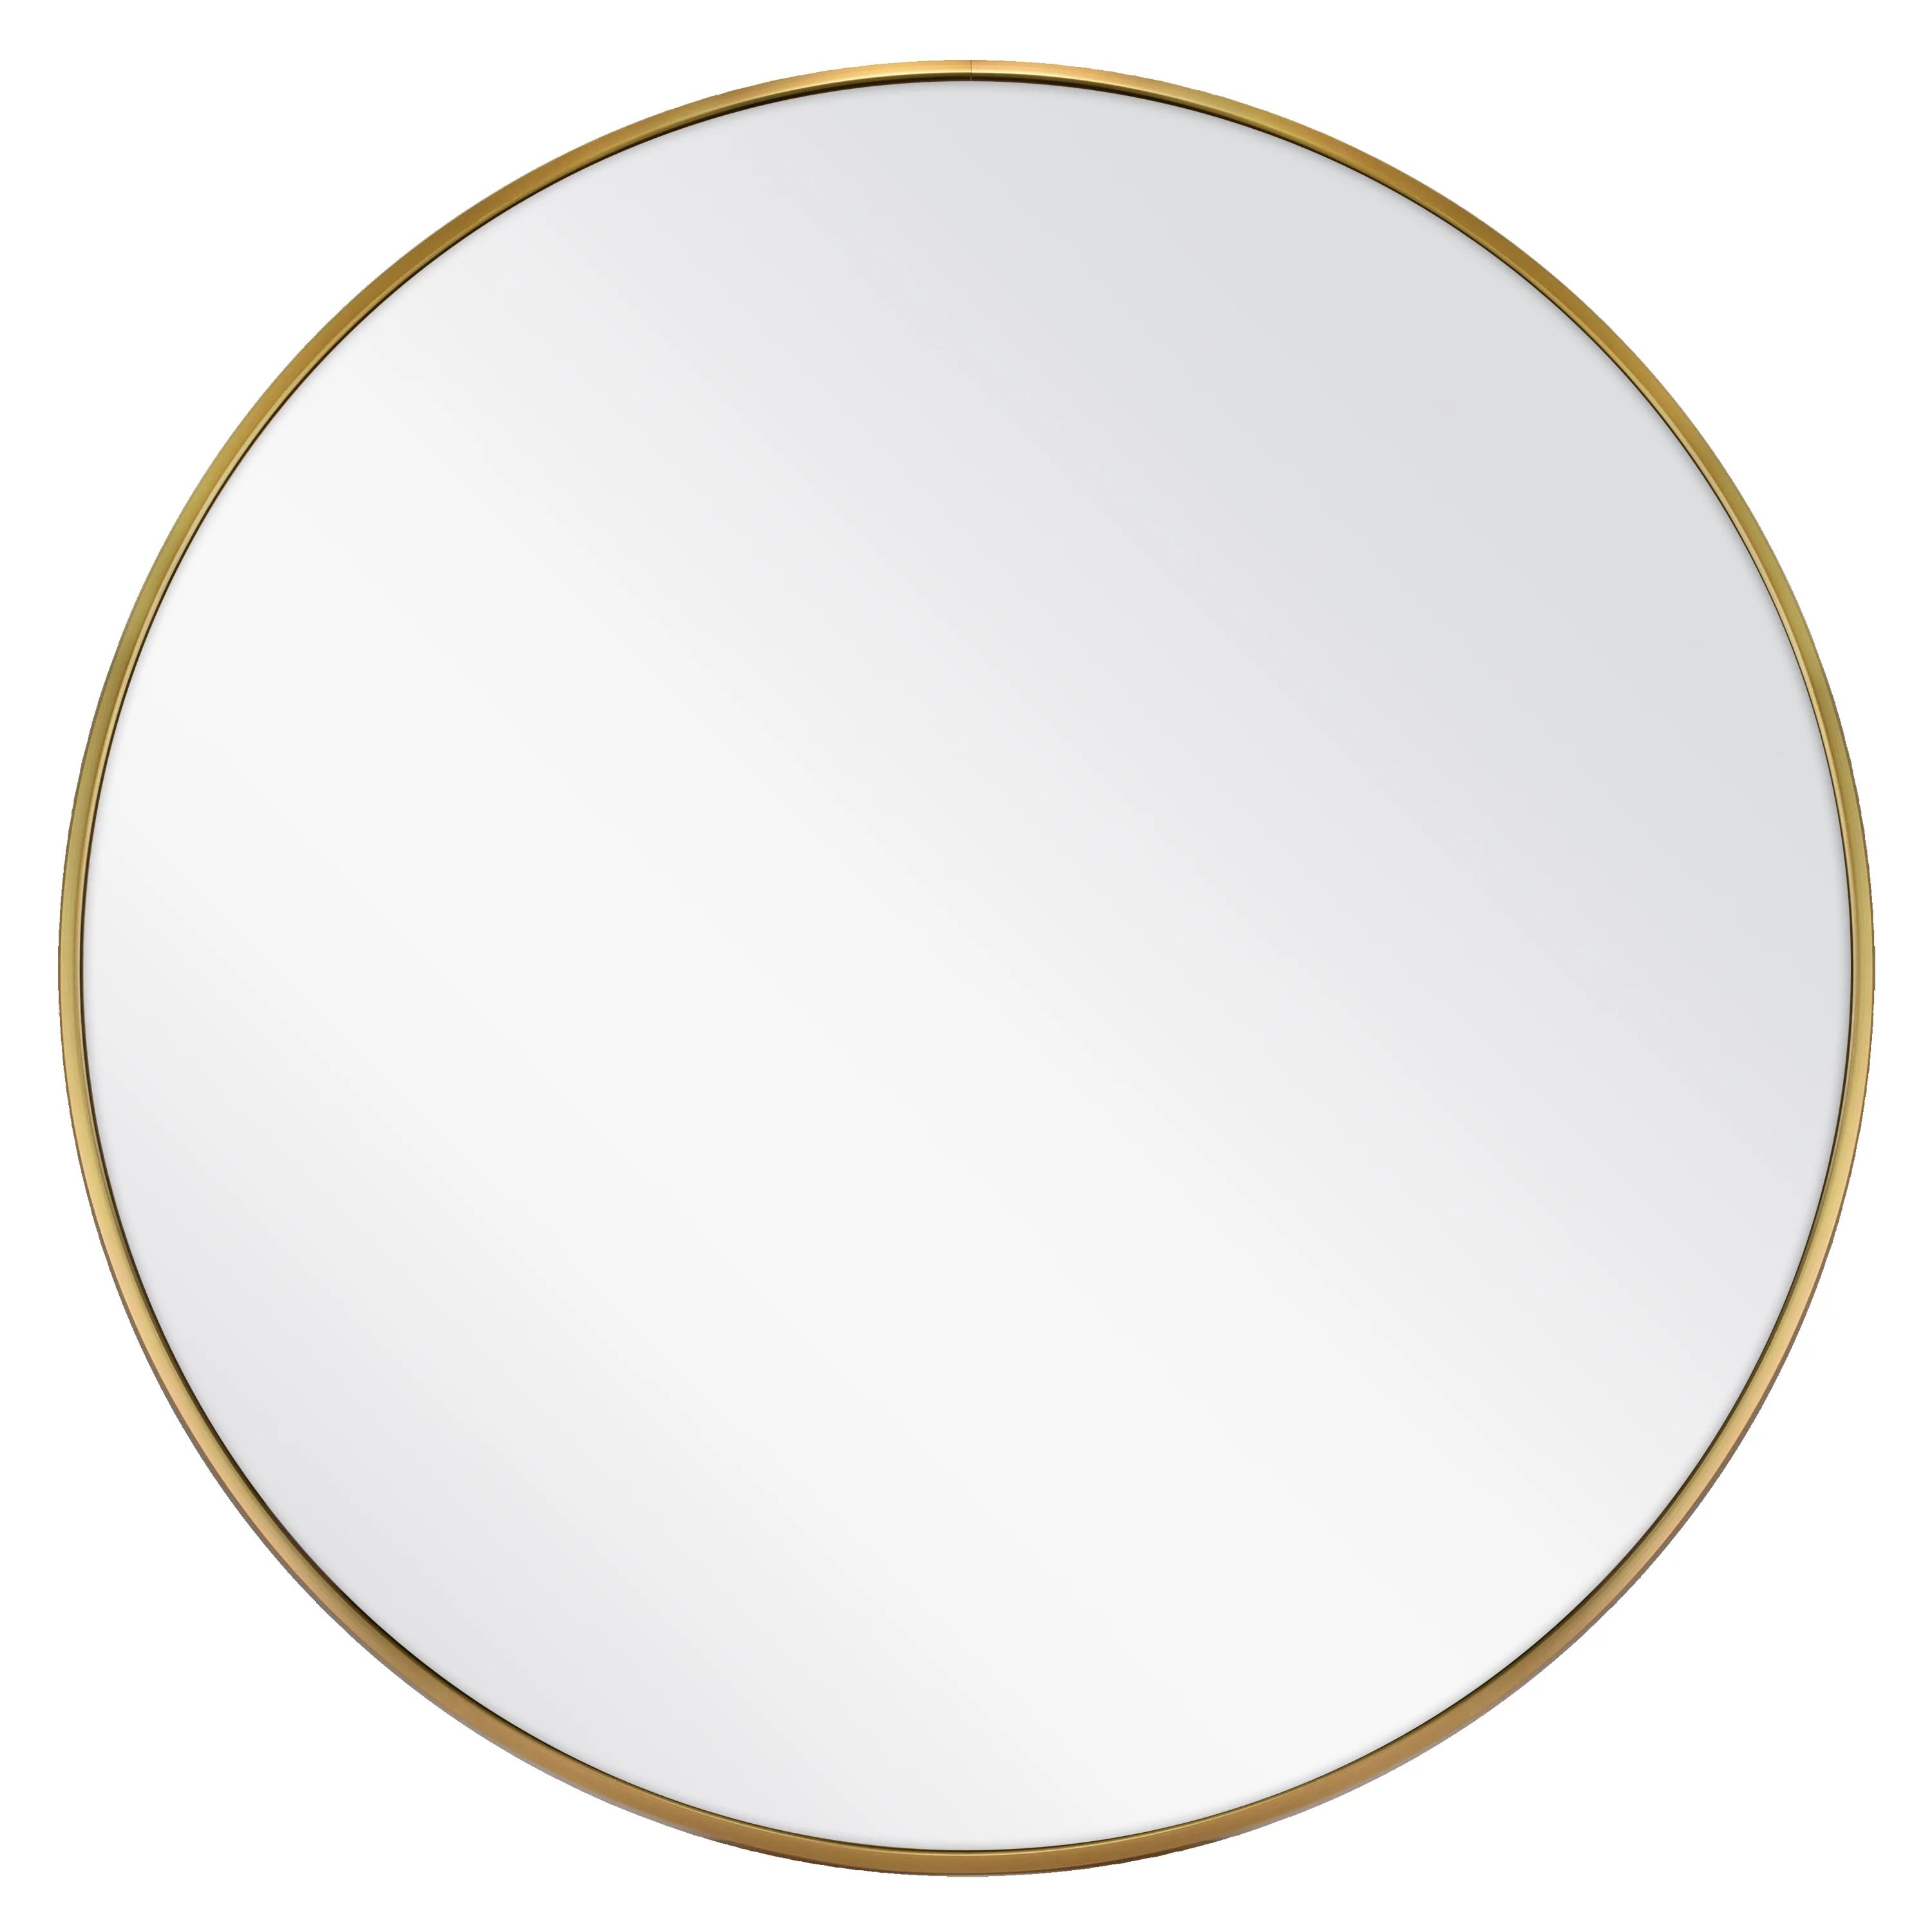 Better Homes & Gardens 28 inch Round Metal Wall Mirror, Gold | Walmart (US)